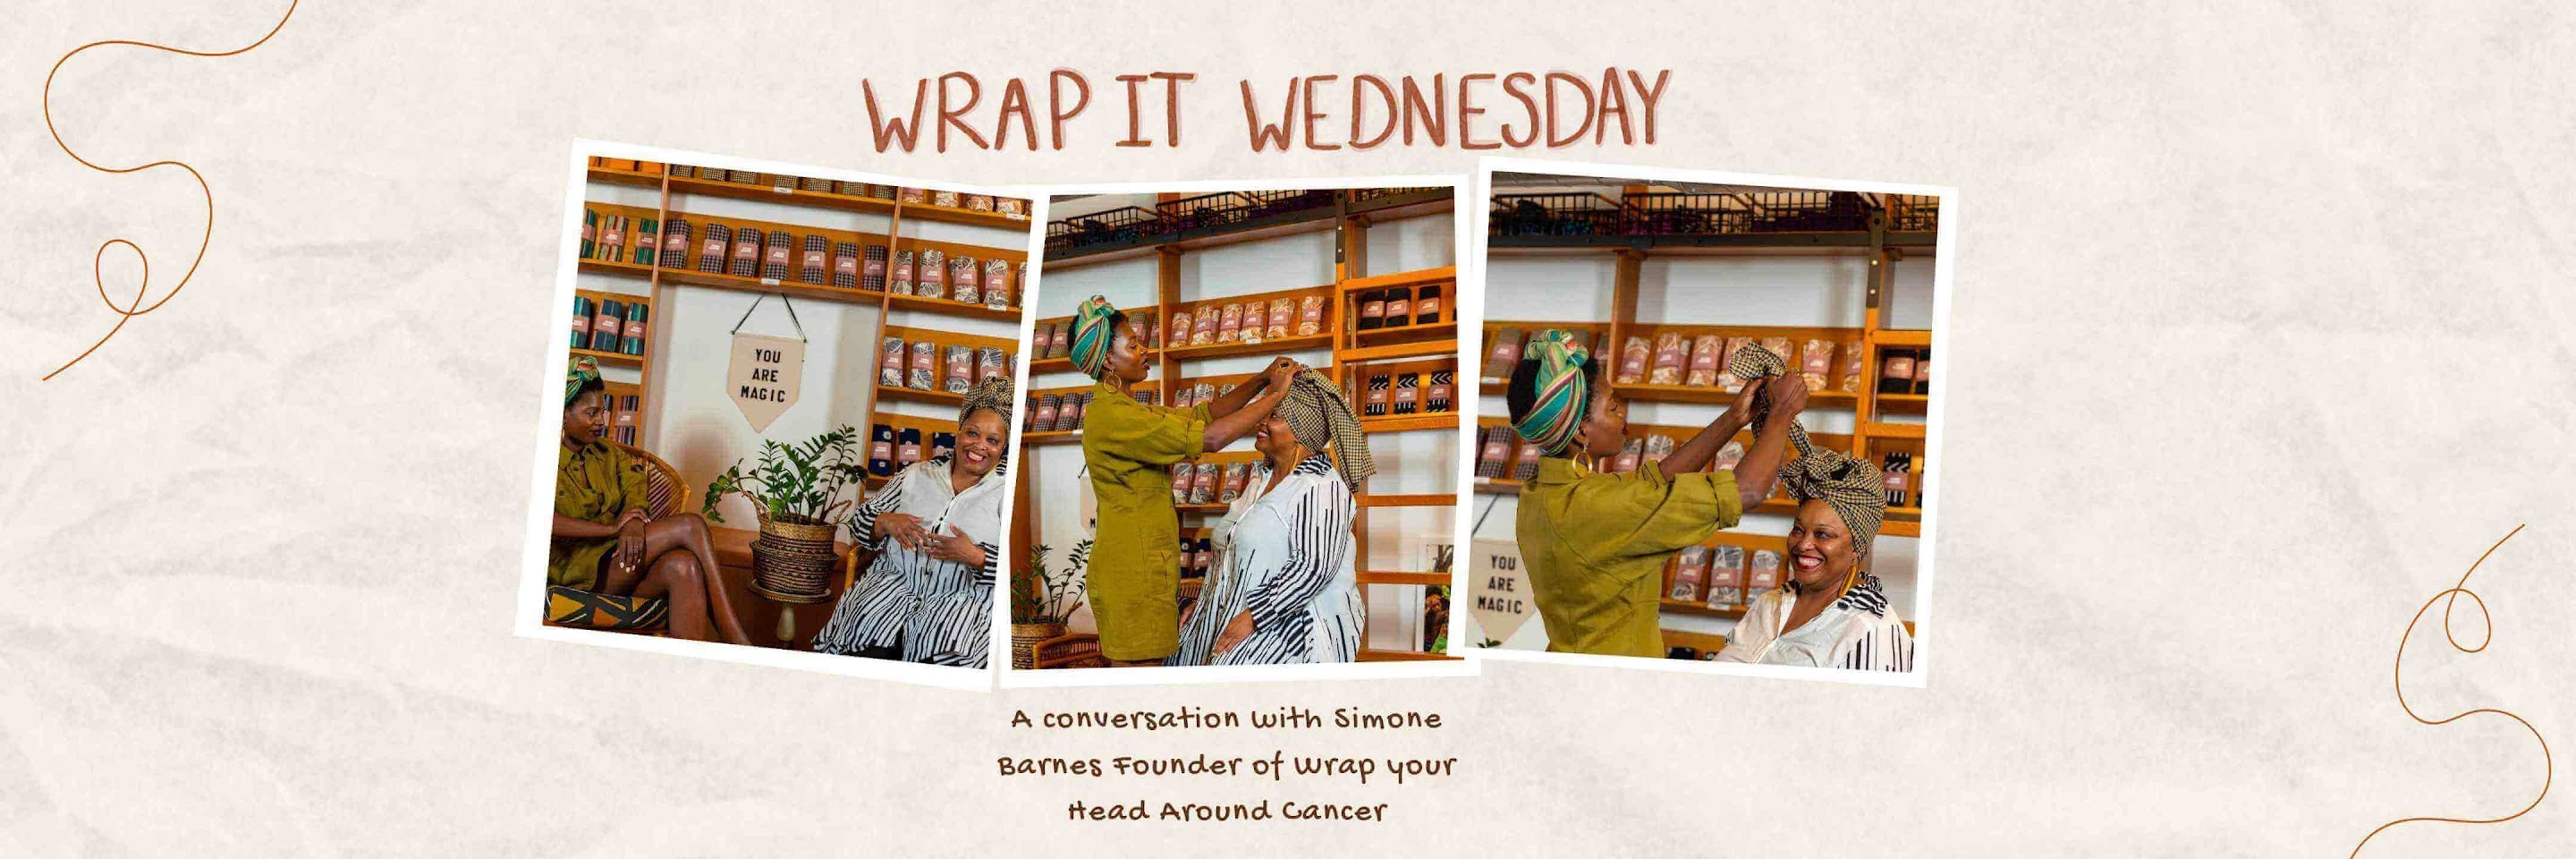 Wrap It Wednesday: Wrap Your Head Around Cancer with Simone Monique Barnes